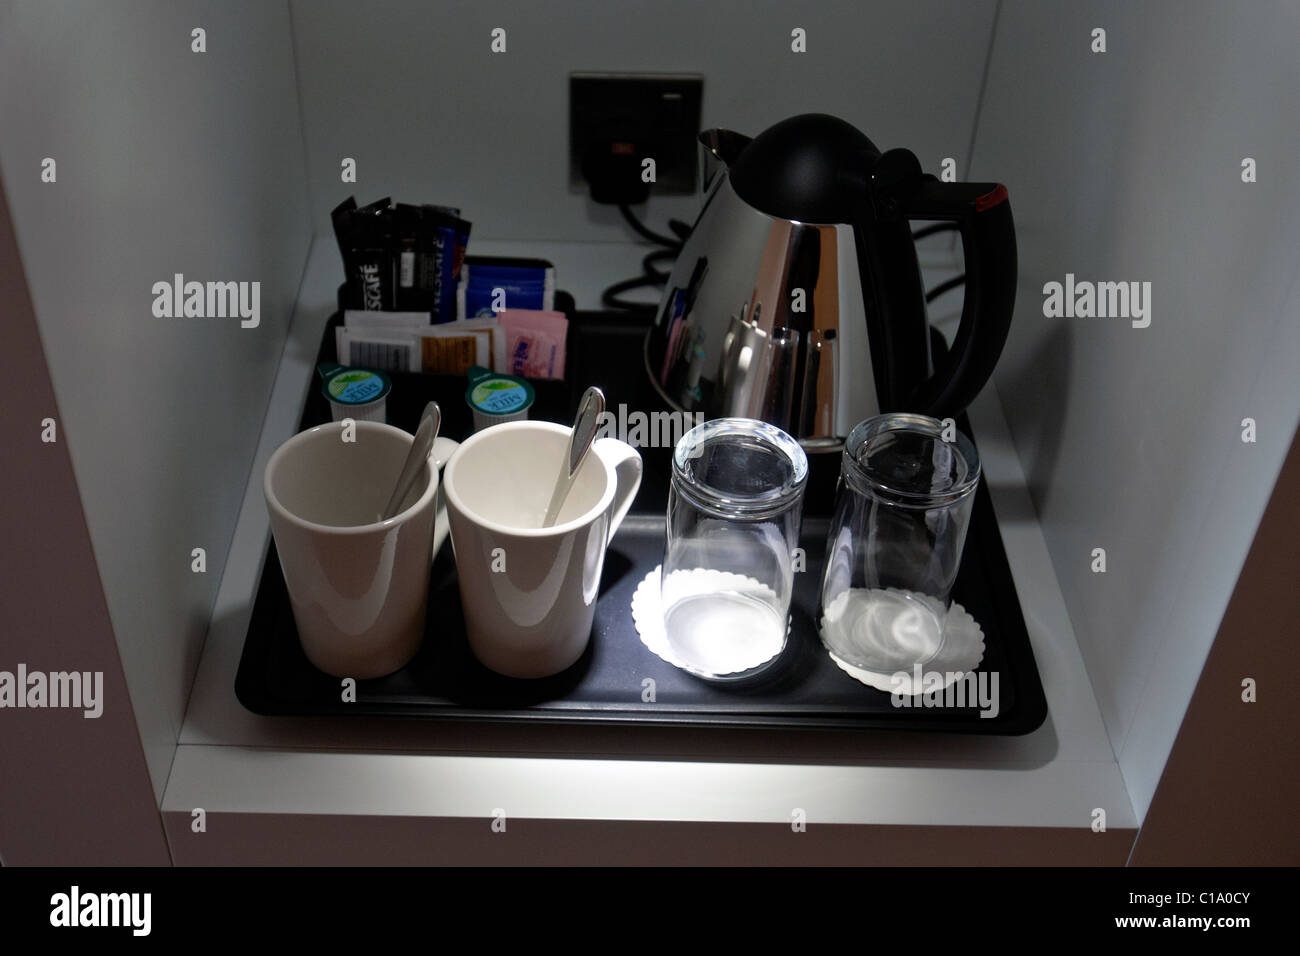 hotel coffee making facilities Stock Photo